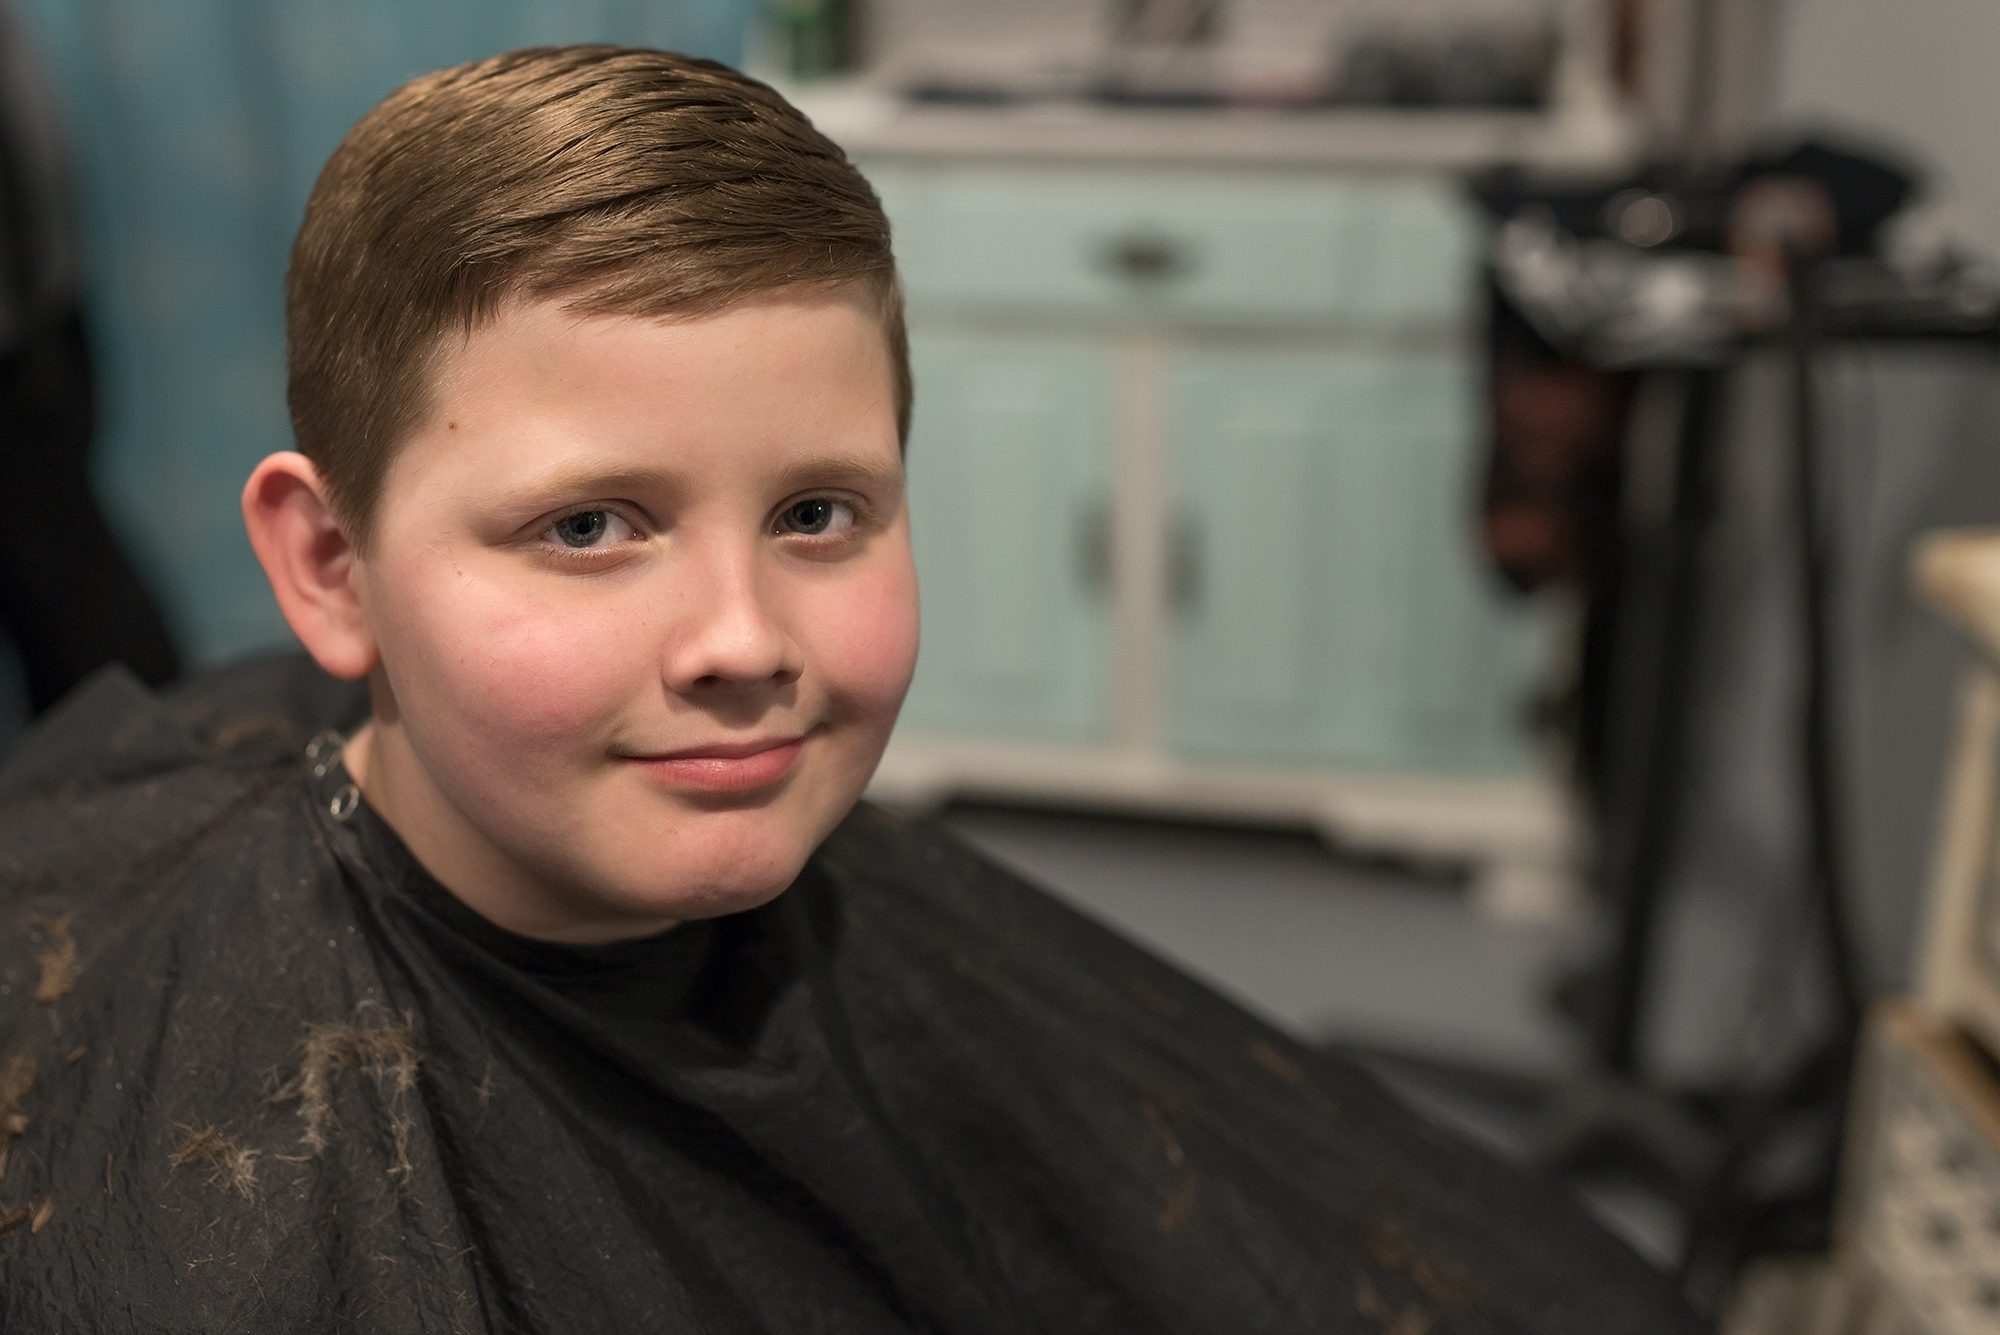 New Braunfels child boy lifestyle haircut photographer